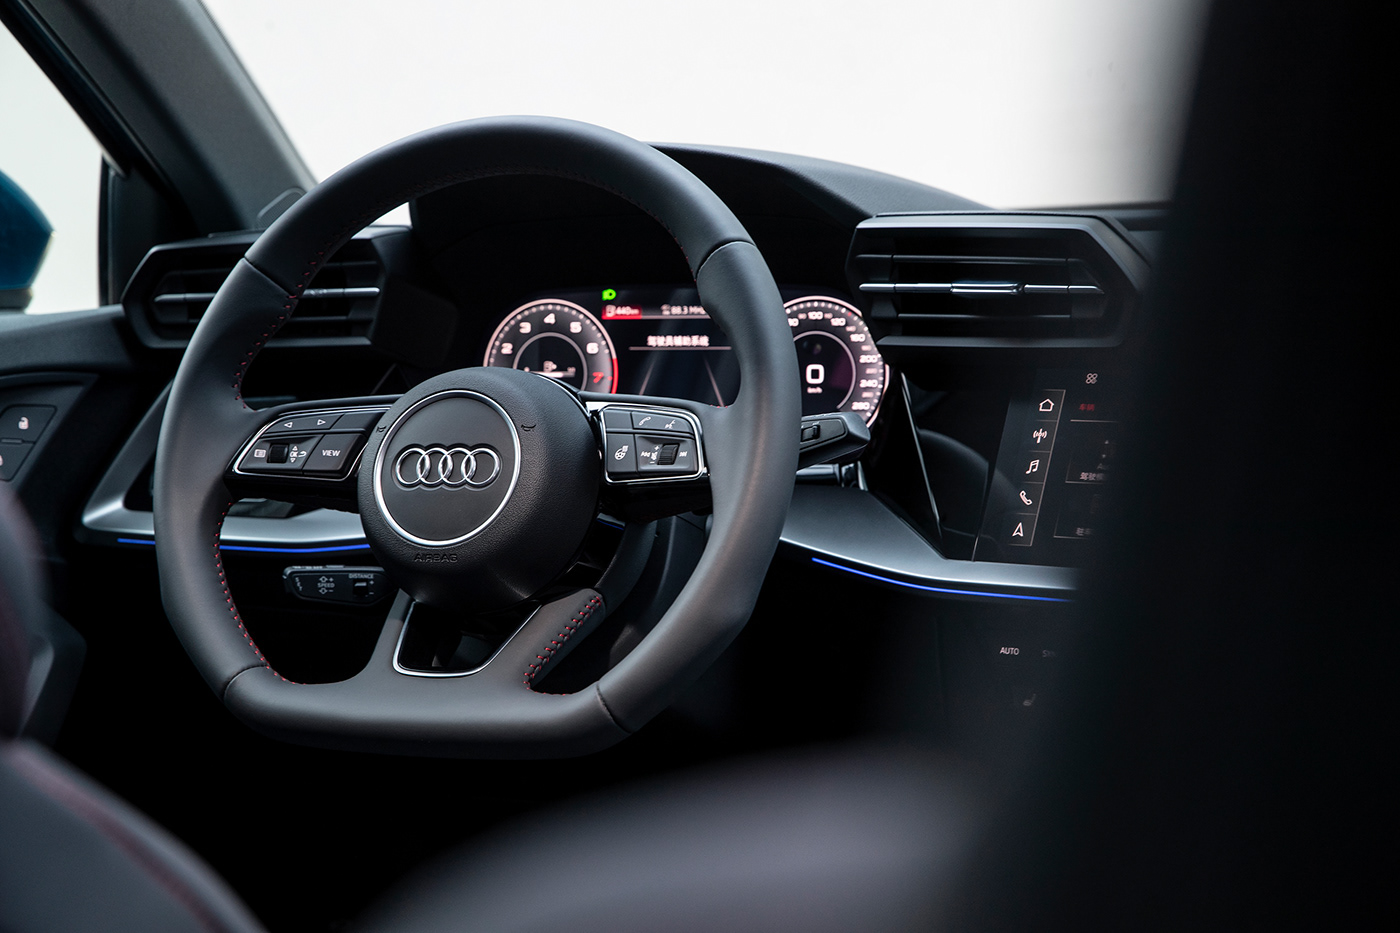 Audi Audi A3 car photography lifestyle The car